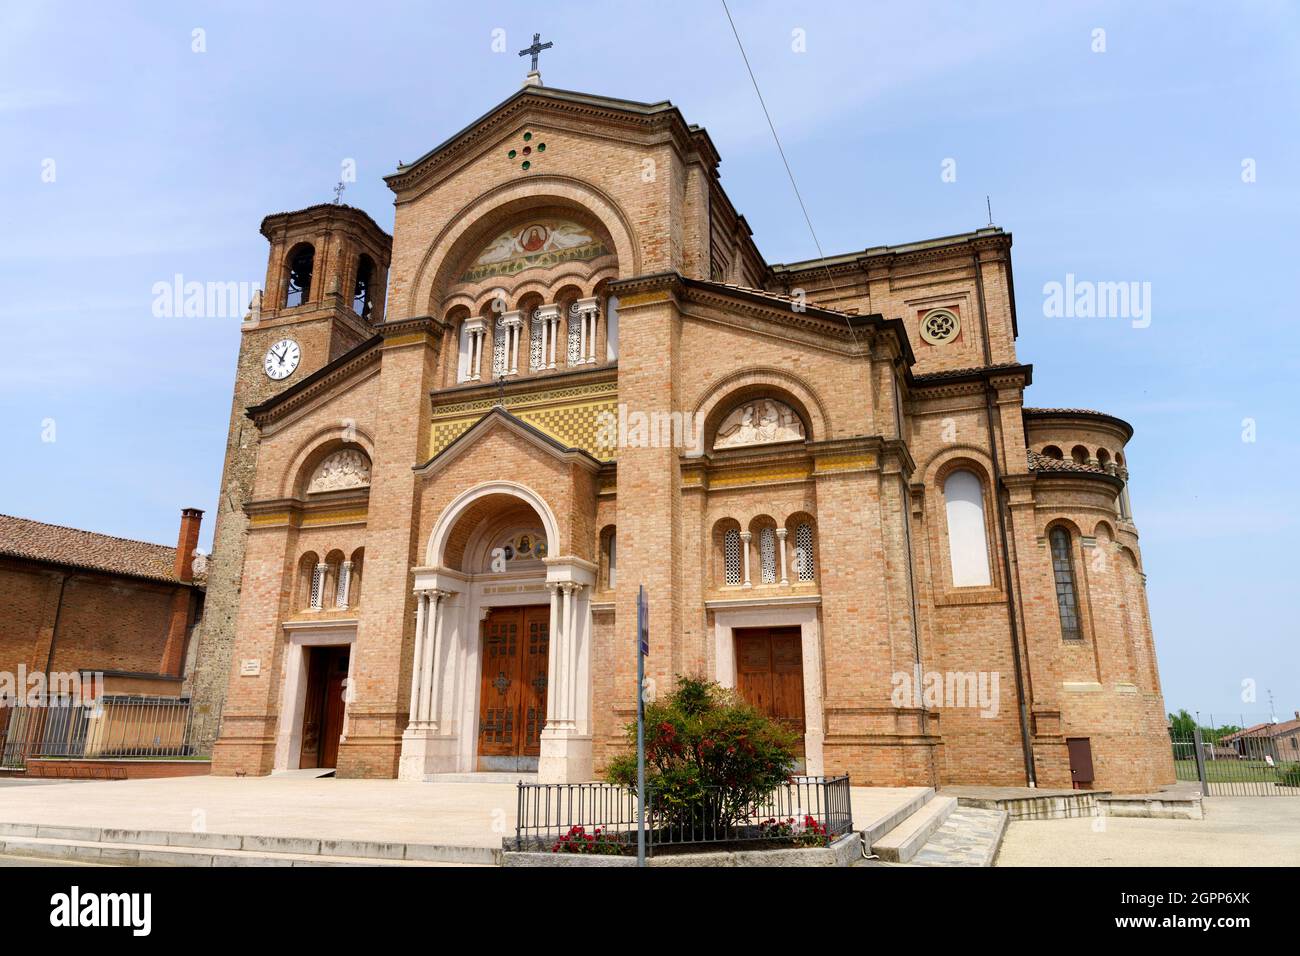 Podenzano, Piacenza province, Emilia-Romagna, Italy: exterior of the San germano church, in Romanesque Revival style Stock Photo